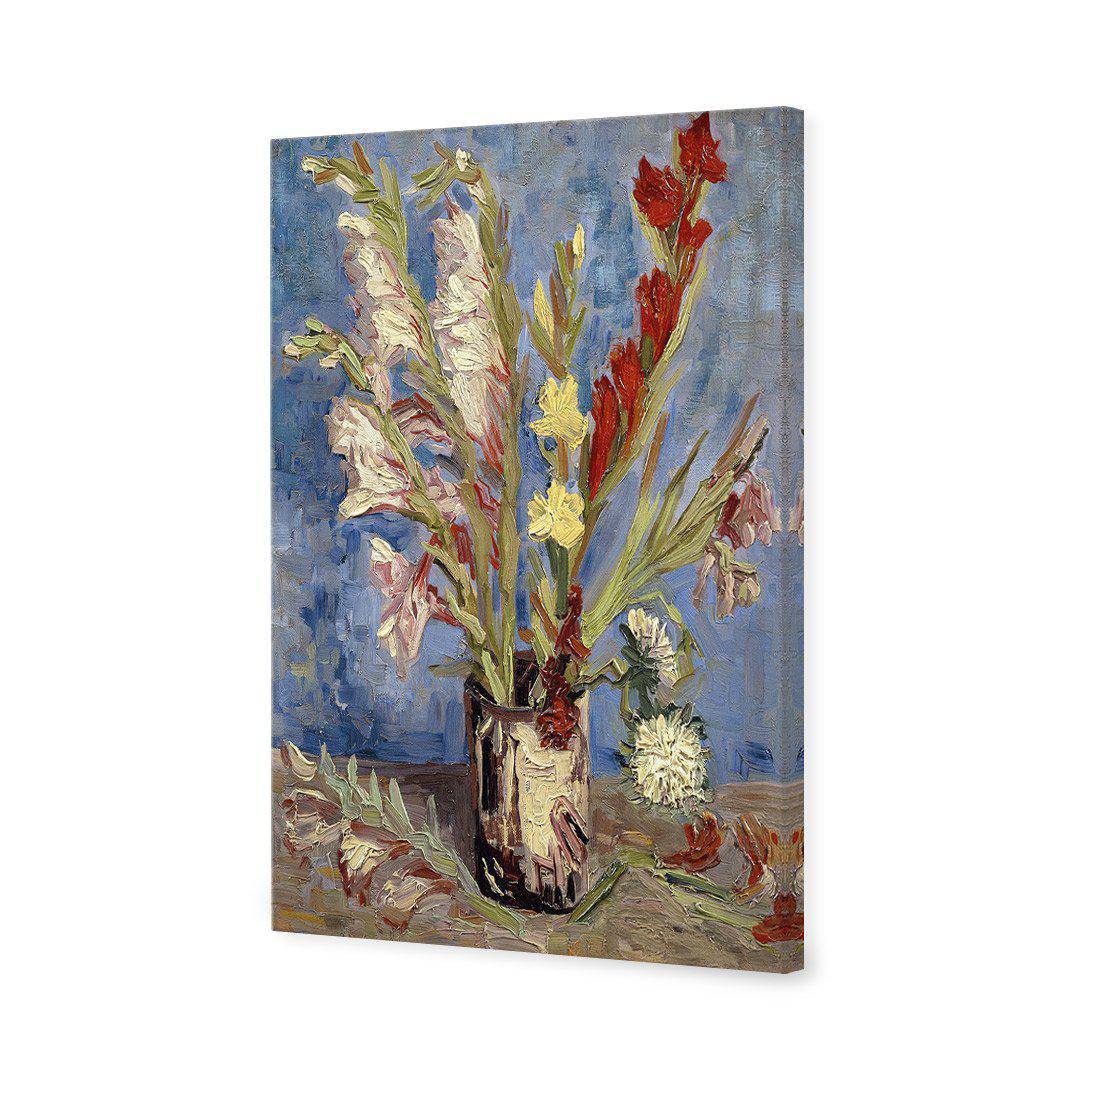 Vase Of Gladioli - Van Gogh Canvas Art-Canvas-Wall Art Designs-45x30cm-Canvas - No Frame-Wall Art Designs